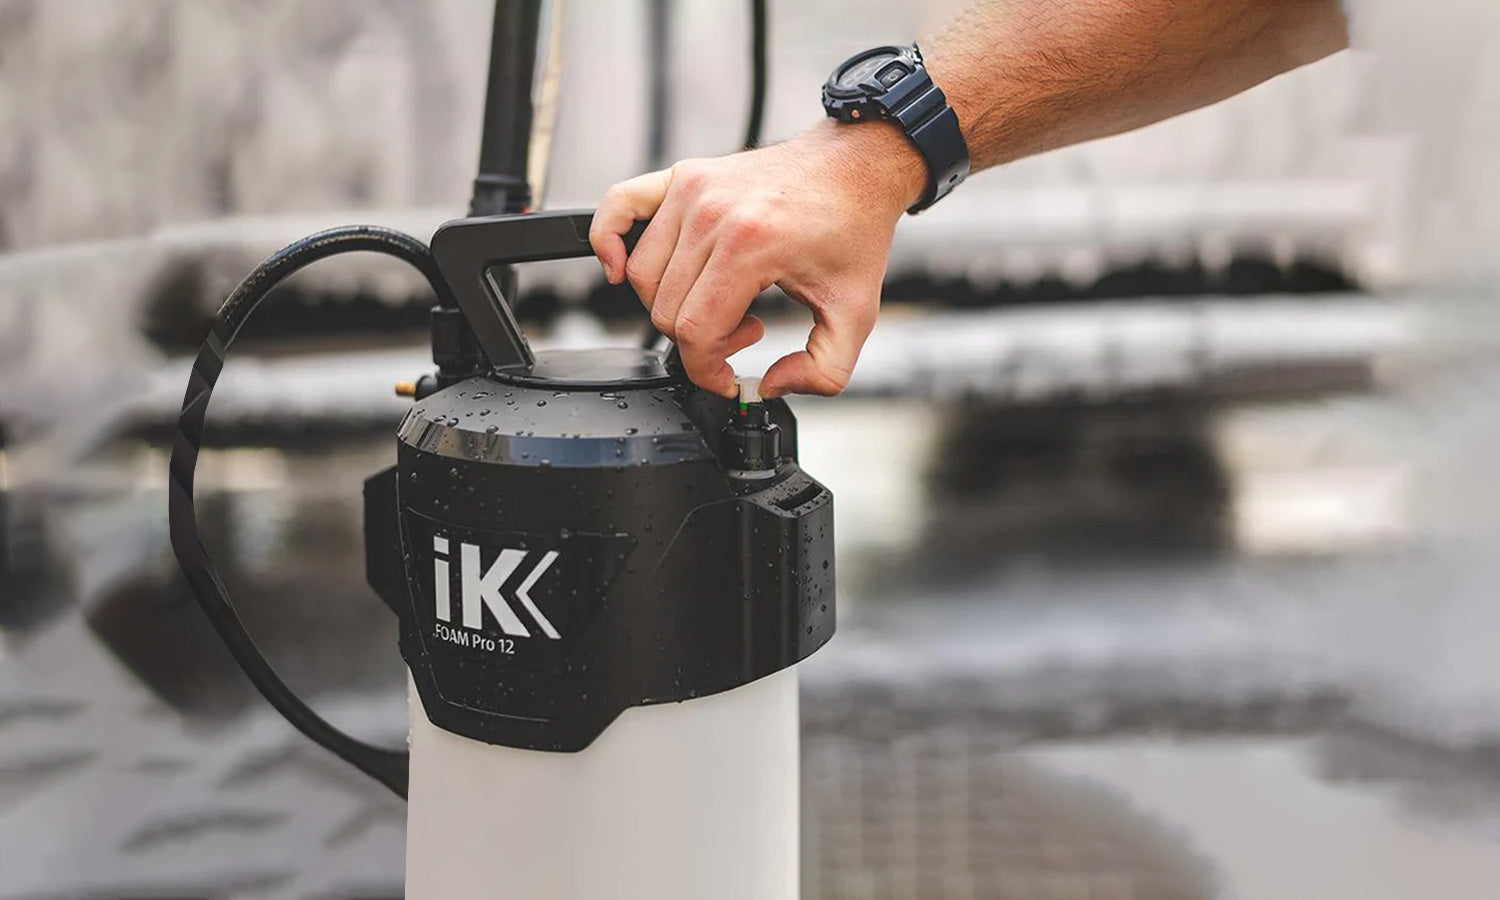 iK e Foam Pro 12 Sprayer | The Rag Company